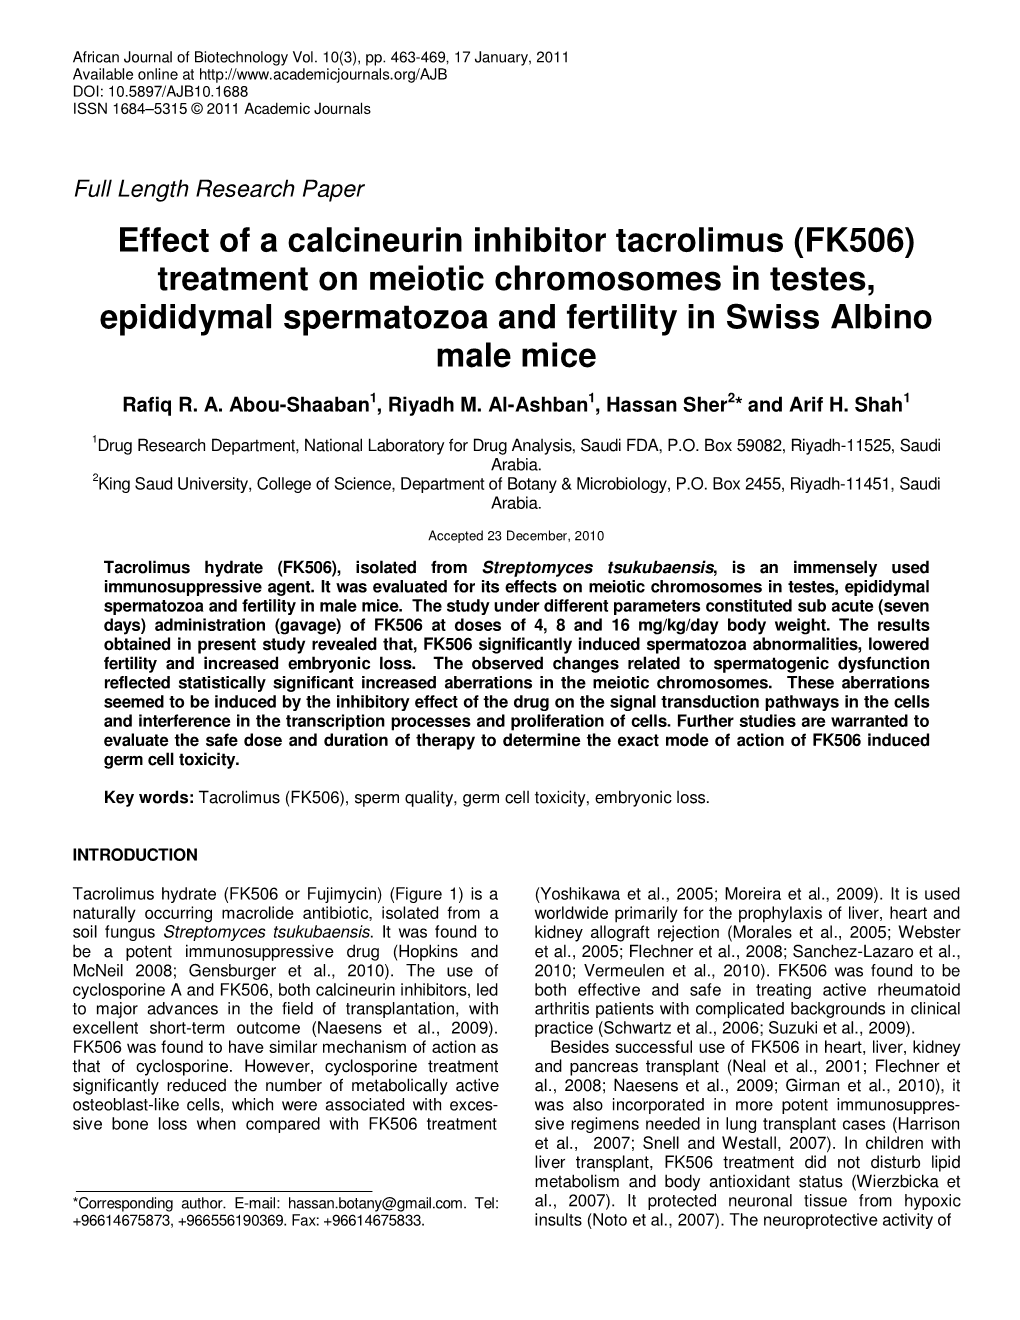 Treatment on Meiotic Chromosomes in Testes, Epididymal Spermatozoa and Fertility in Swiss Albino Male Mice